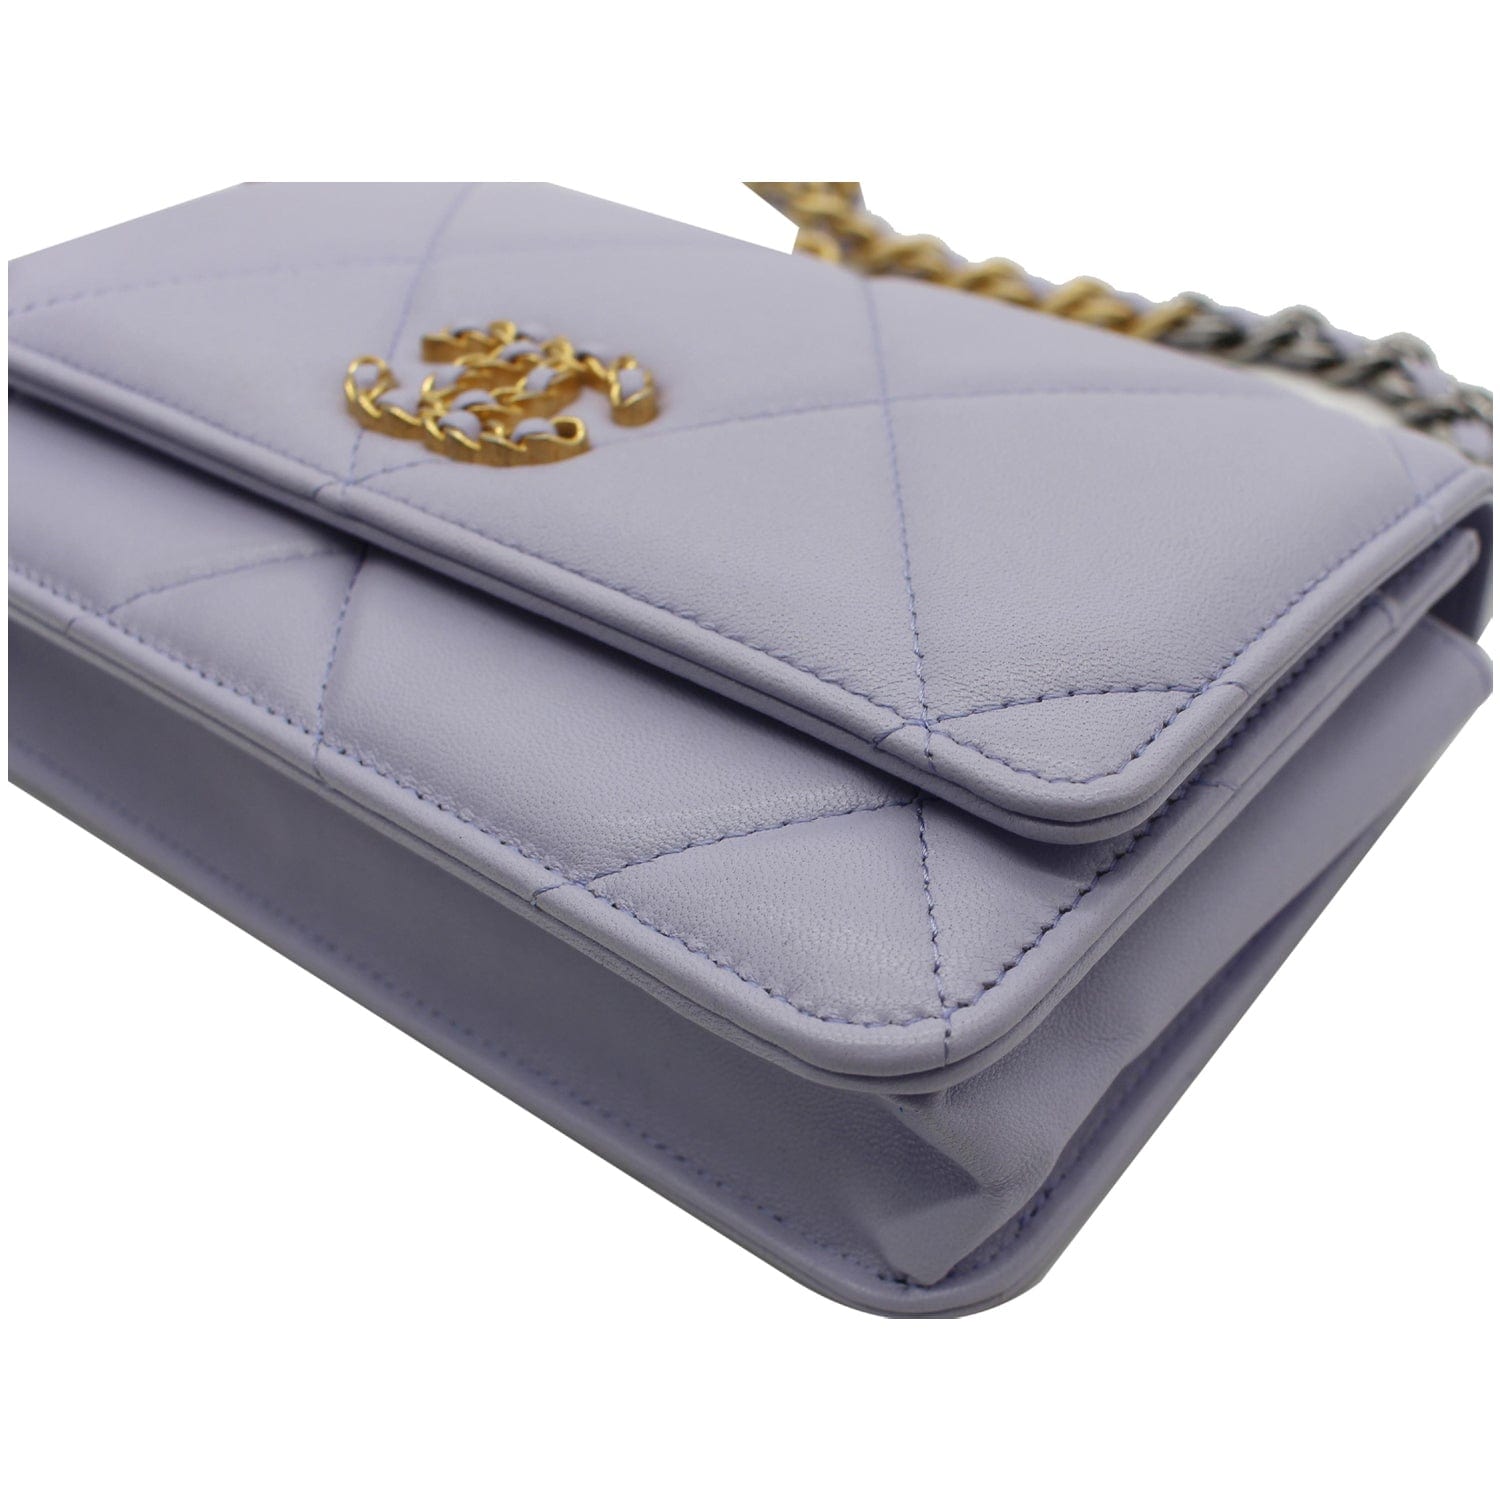 Chanelwallets Chanel 19c leather medium zip wallet 